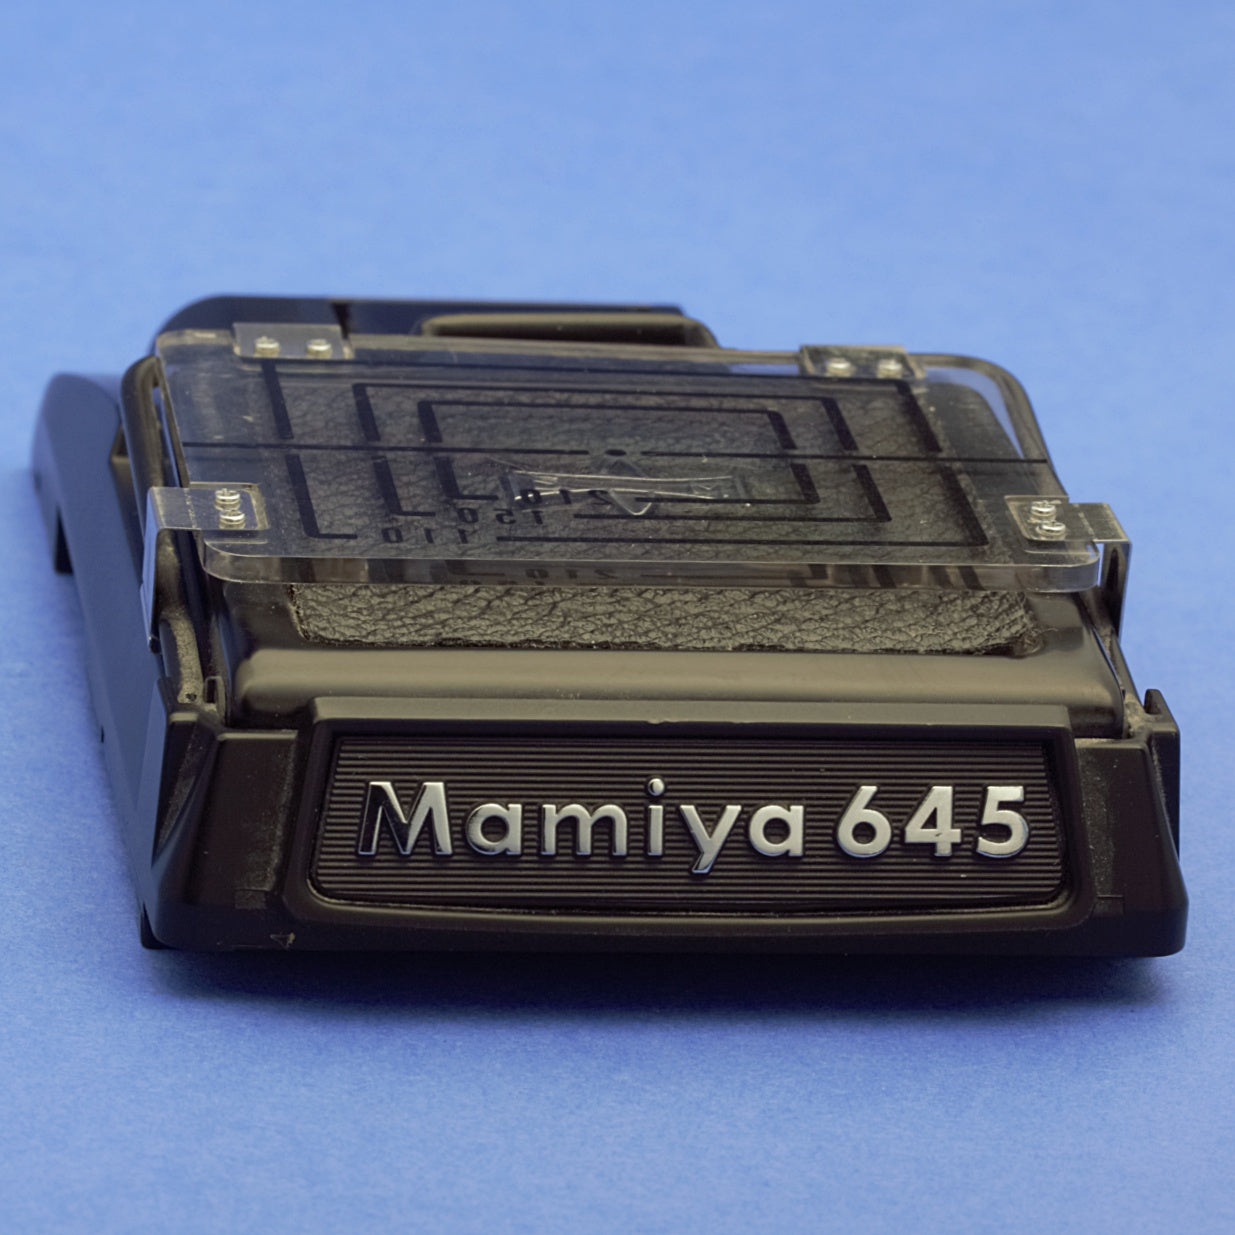 Mamiya Waist Level Finder for M645, 1000S Cameras Mint Condition